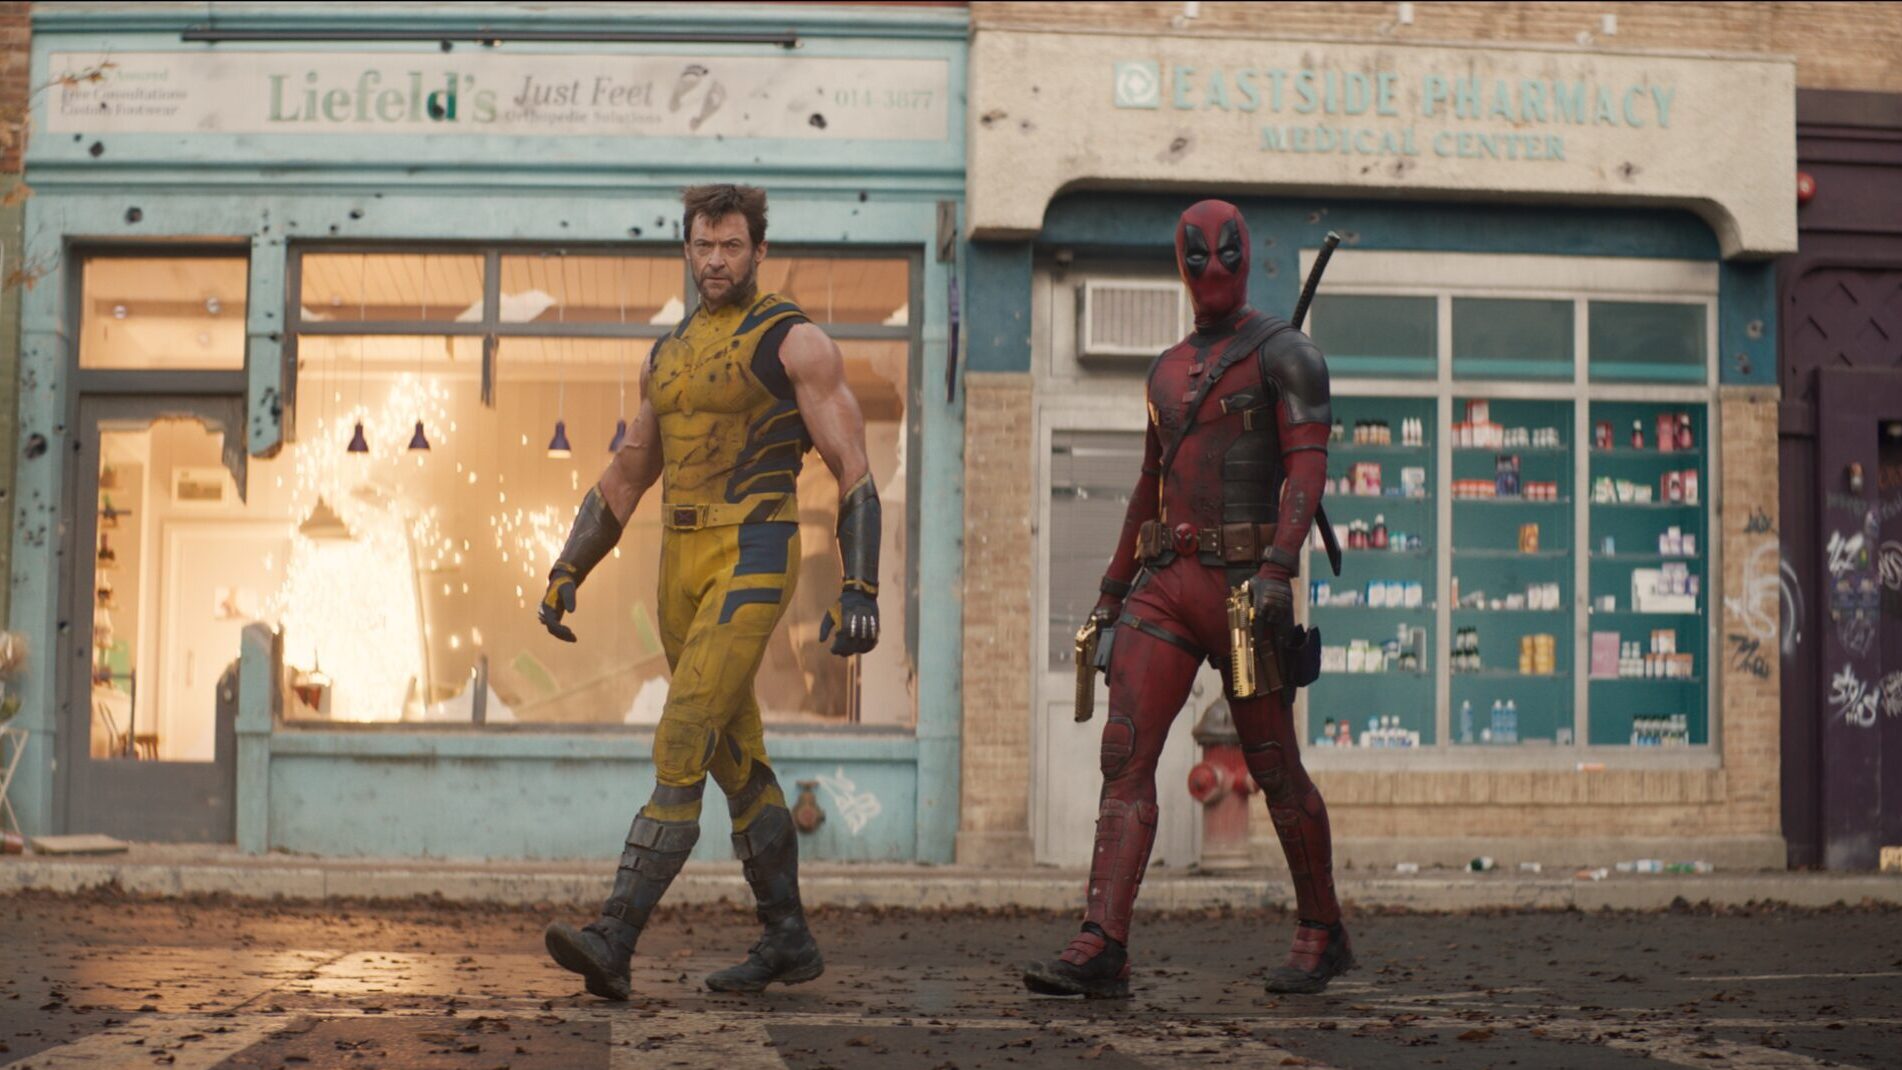 Major sponsors score on-screen partnerships for Deadpool & Wolverine release [Video]